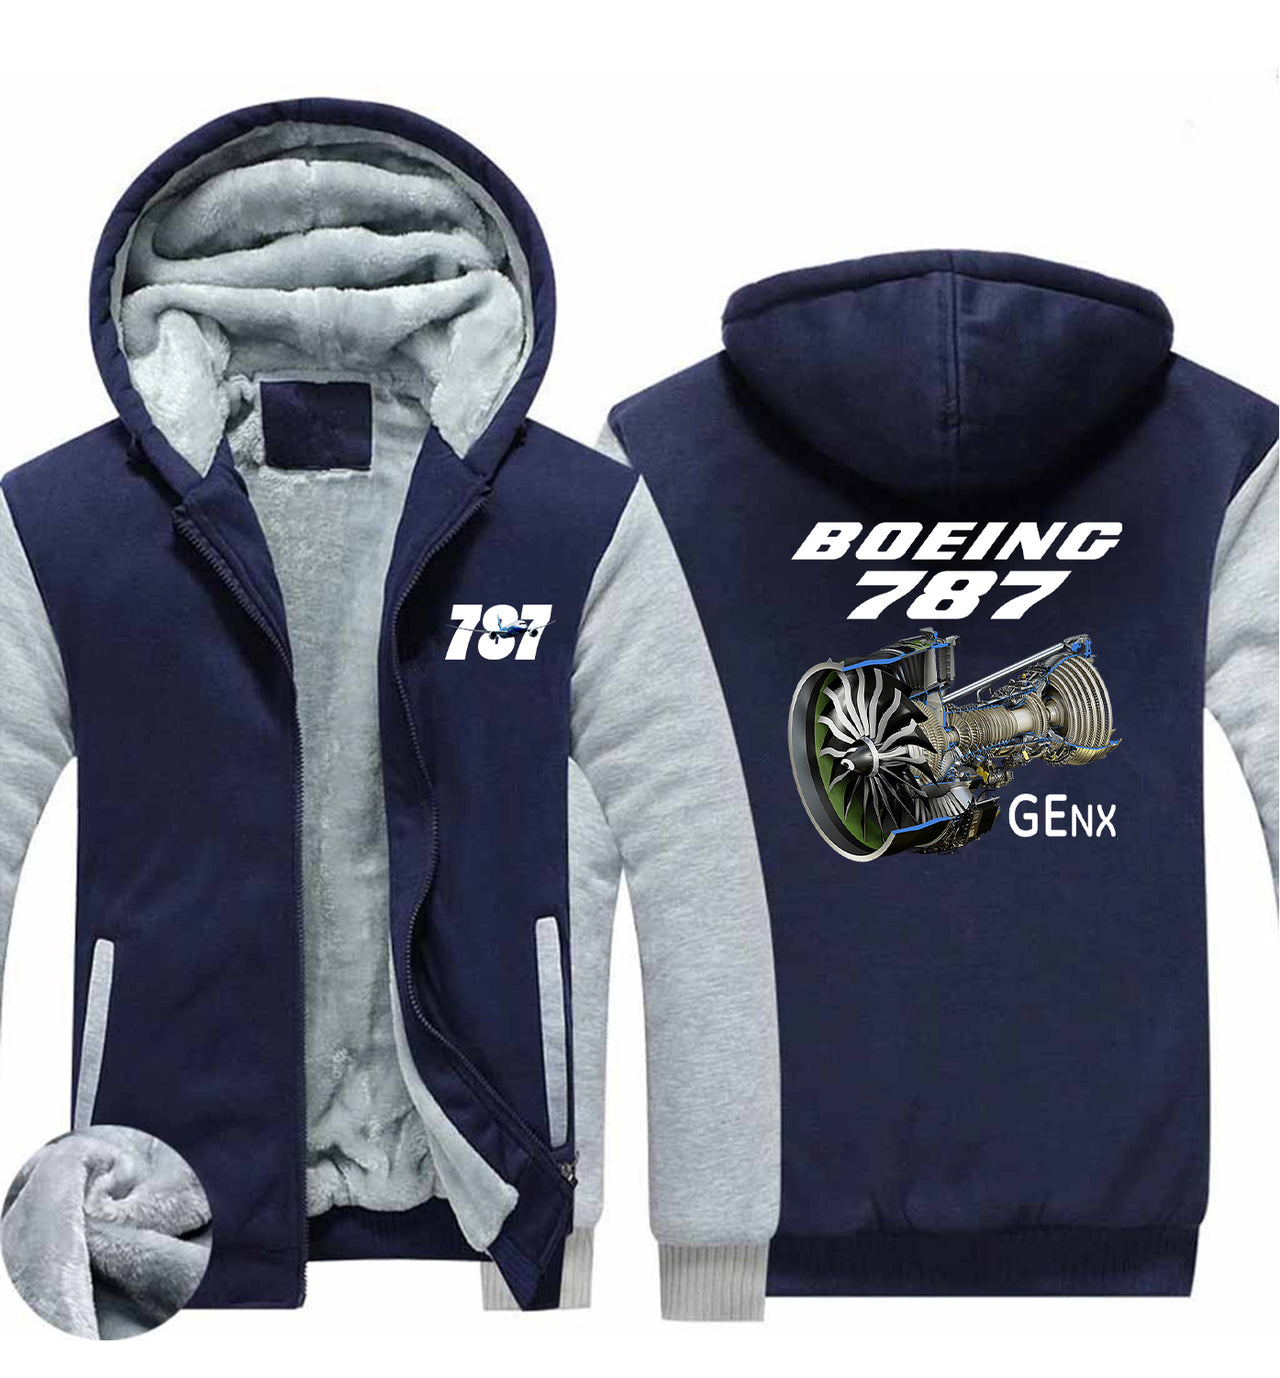 Boeing 787 & GENX Engine Designed Zipped Sweatshirts